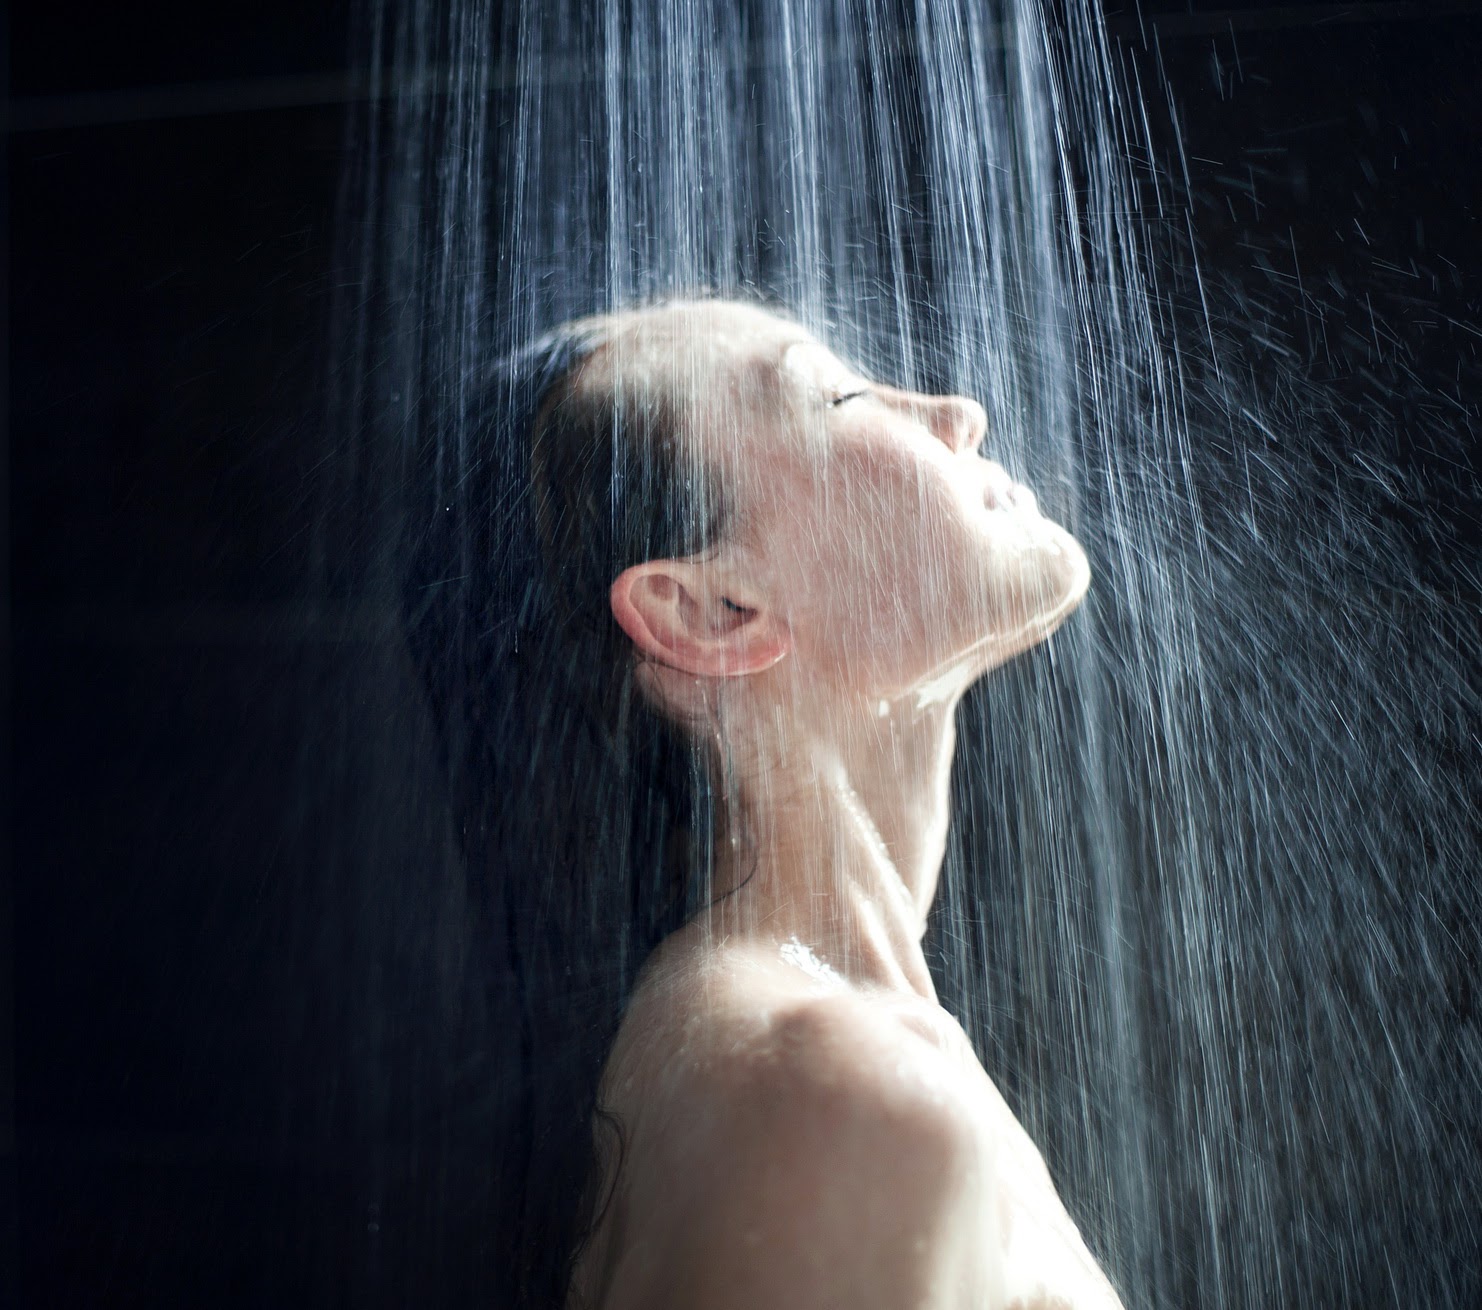 Включи воду в душе. Фотосессия в душе. Моется в душе. Фотосессия под душем. Девочки в душе.